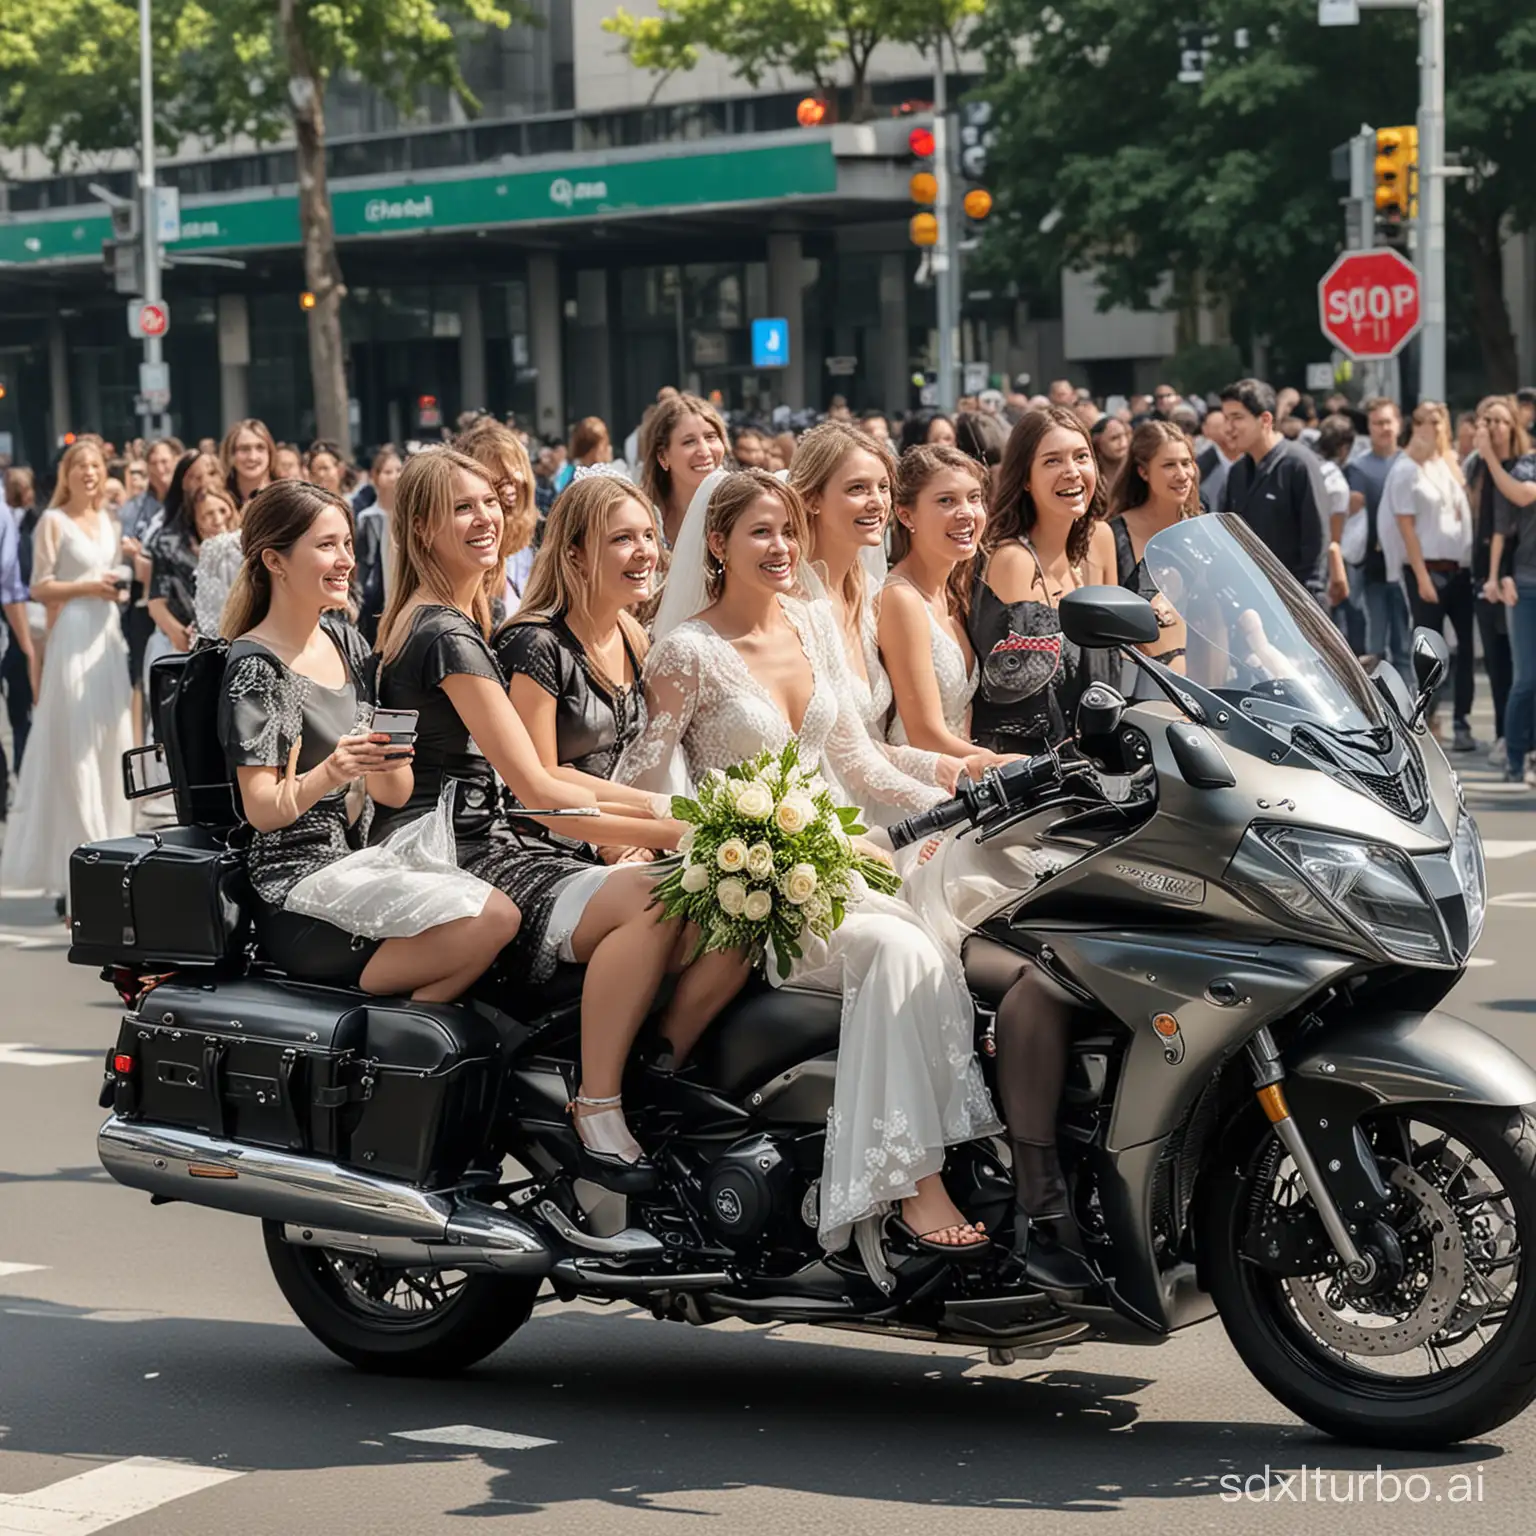 Motorcycle-Wedding-40-Brides-on-a-40Seat-Bike-at-Traffic-Light